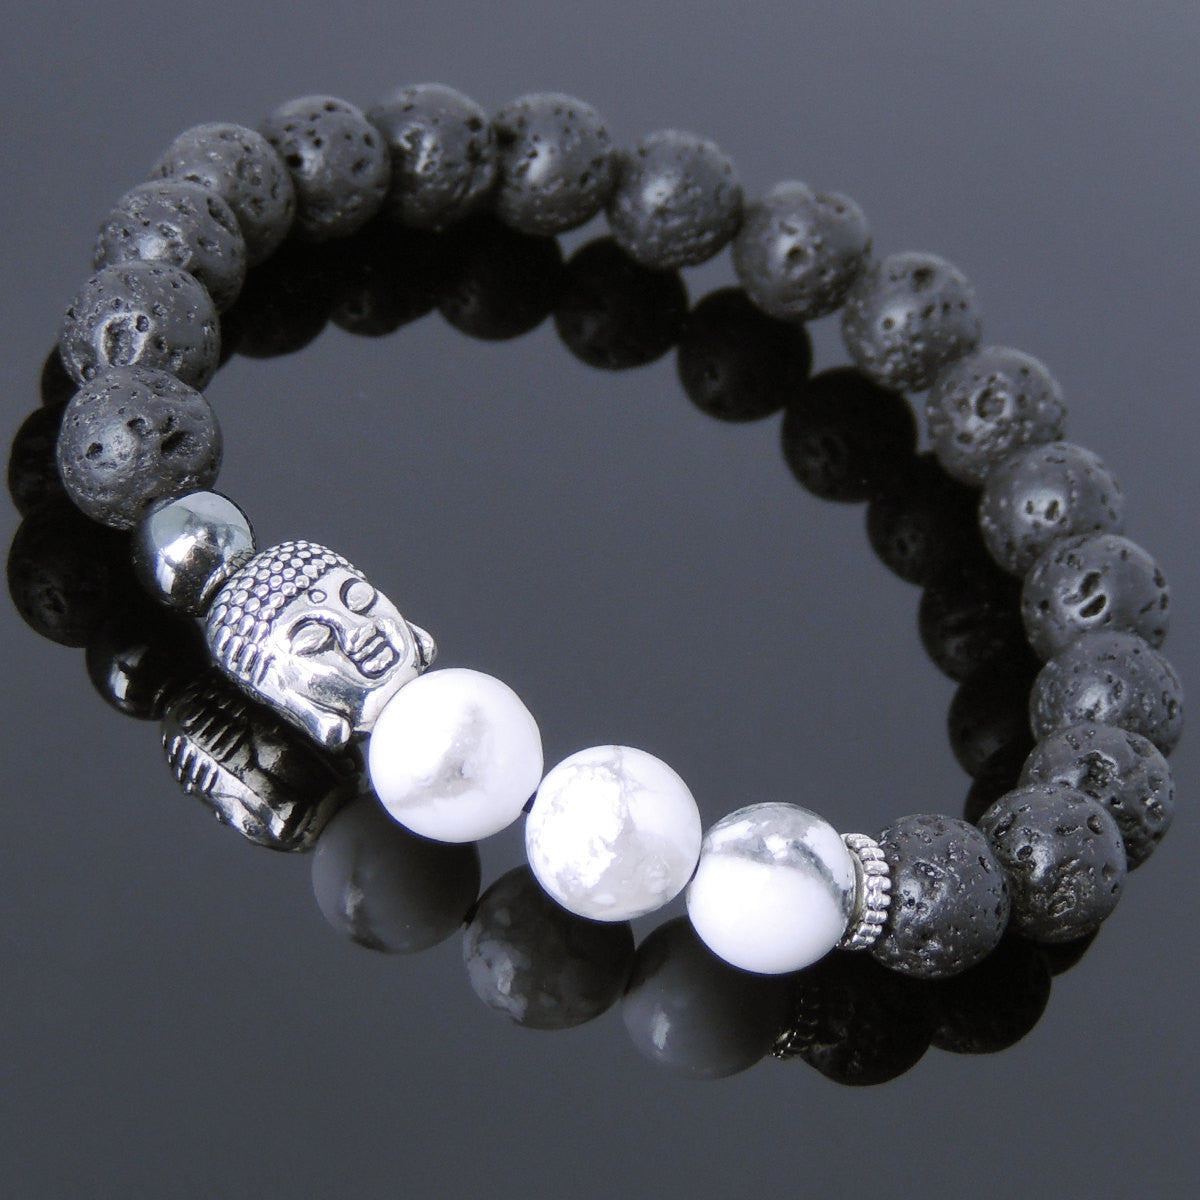 White Howlite Lava Rock & Hematite Healing Gemstone Bracelet with Tibetan Silver Sakyamuni Buddha & Spacers - Handmade by Gem & Silver TSB203